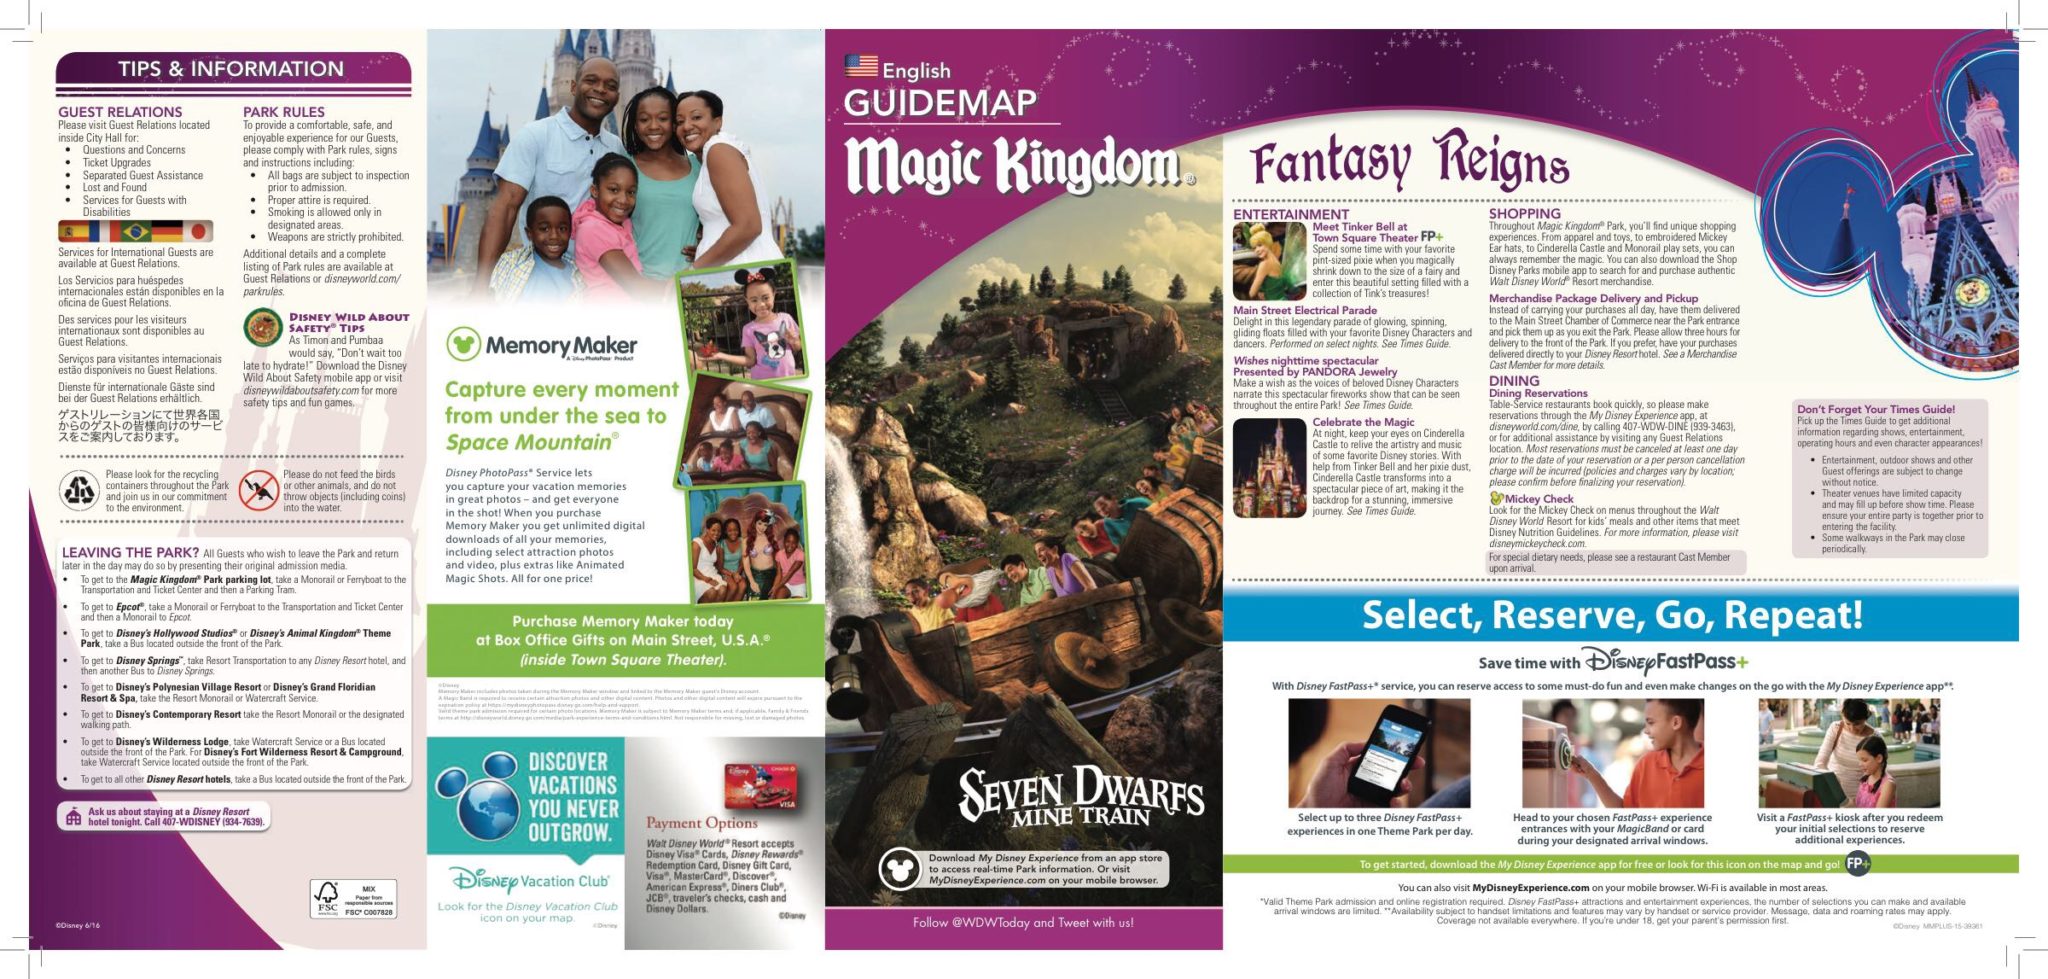 Disney Updates Magic Kingdom Guide Map